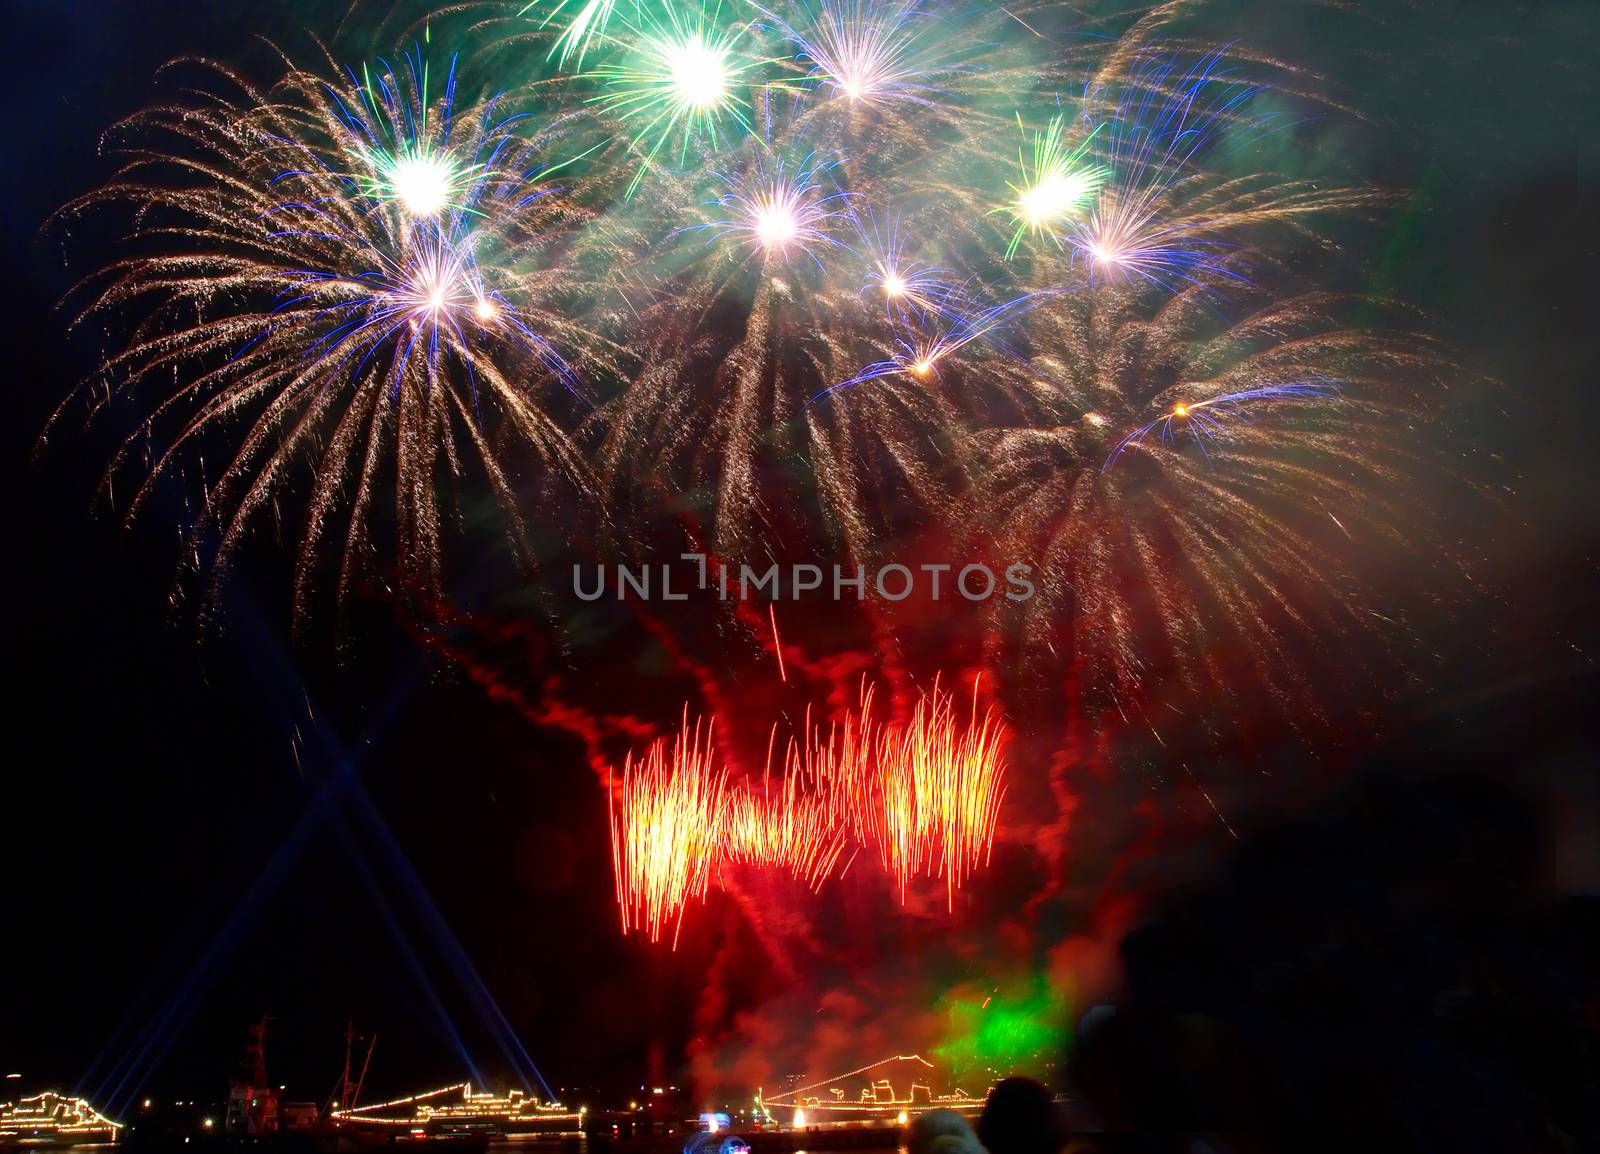 Salute, fireworks above the bay. by vapi